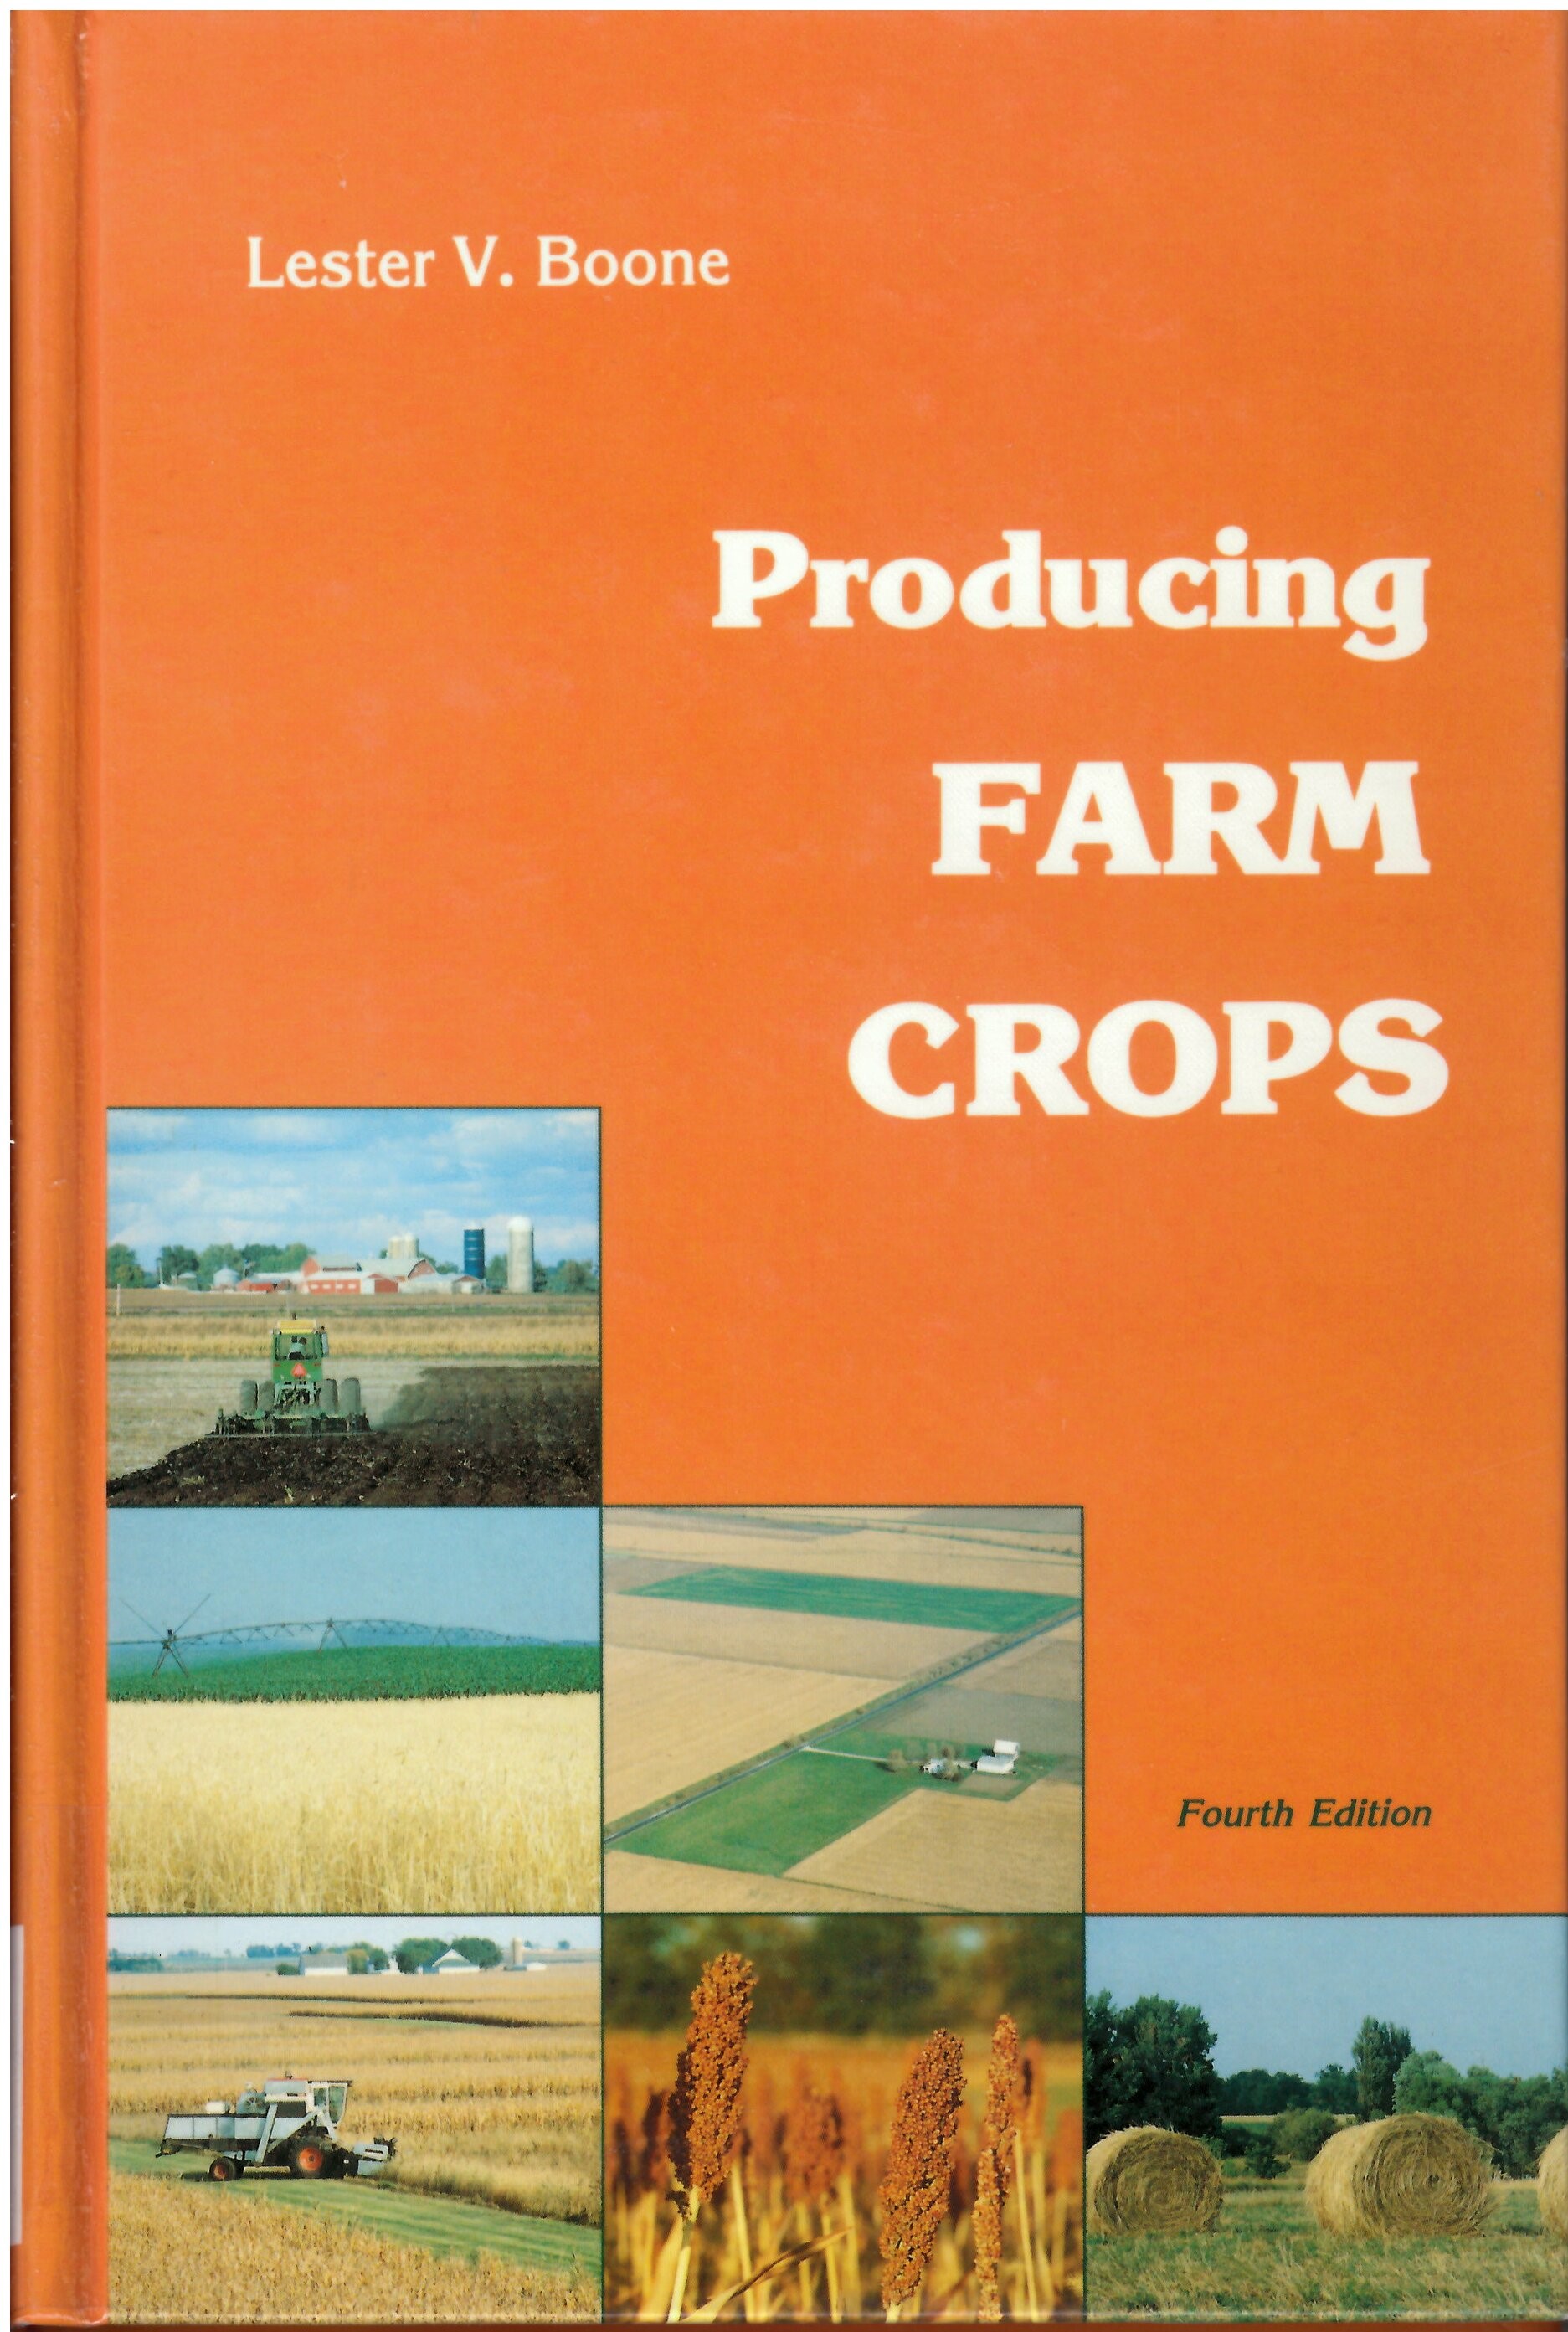 Producing farm crops